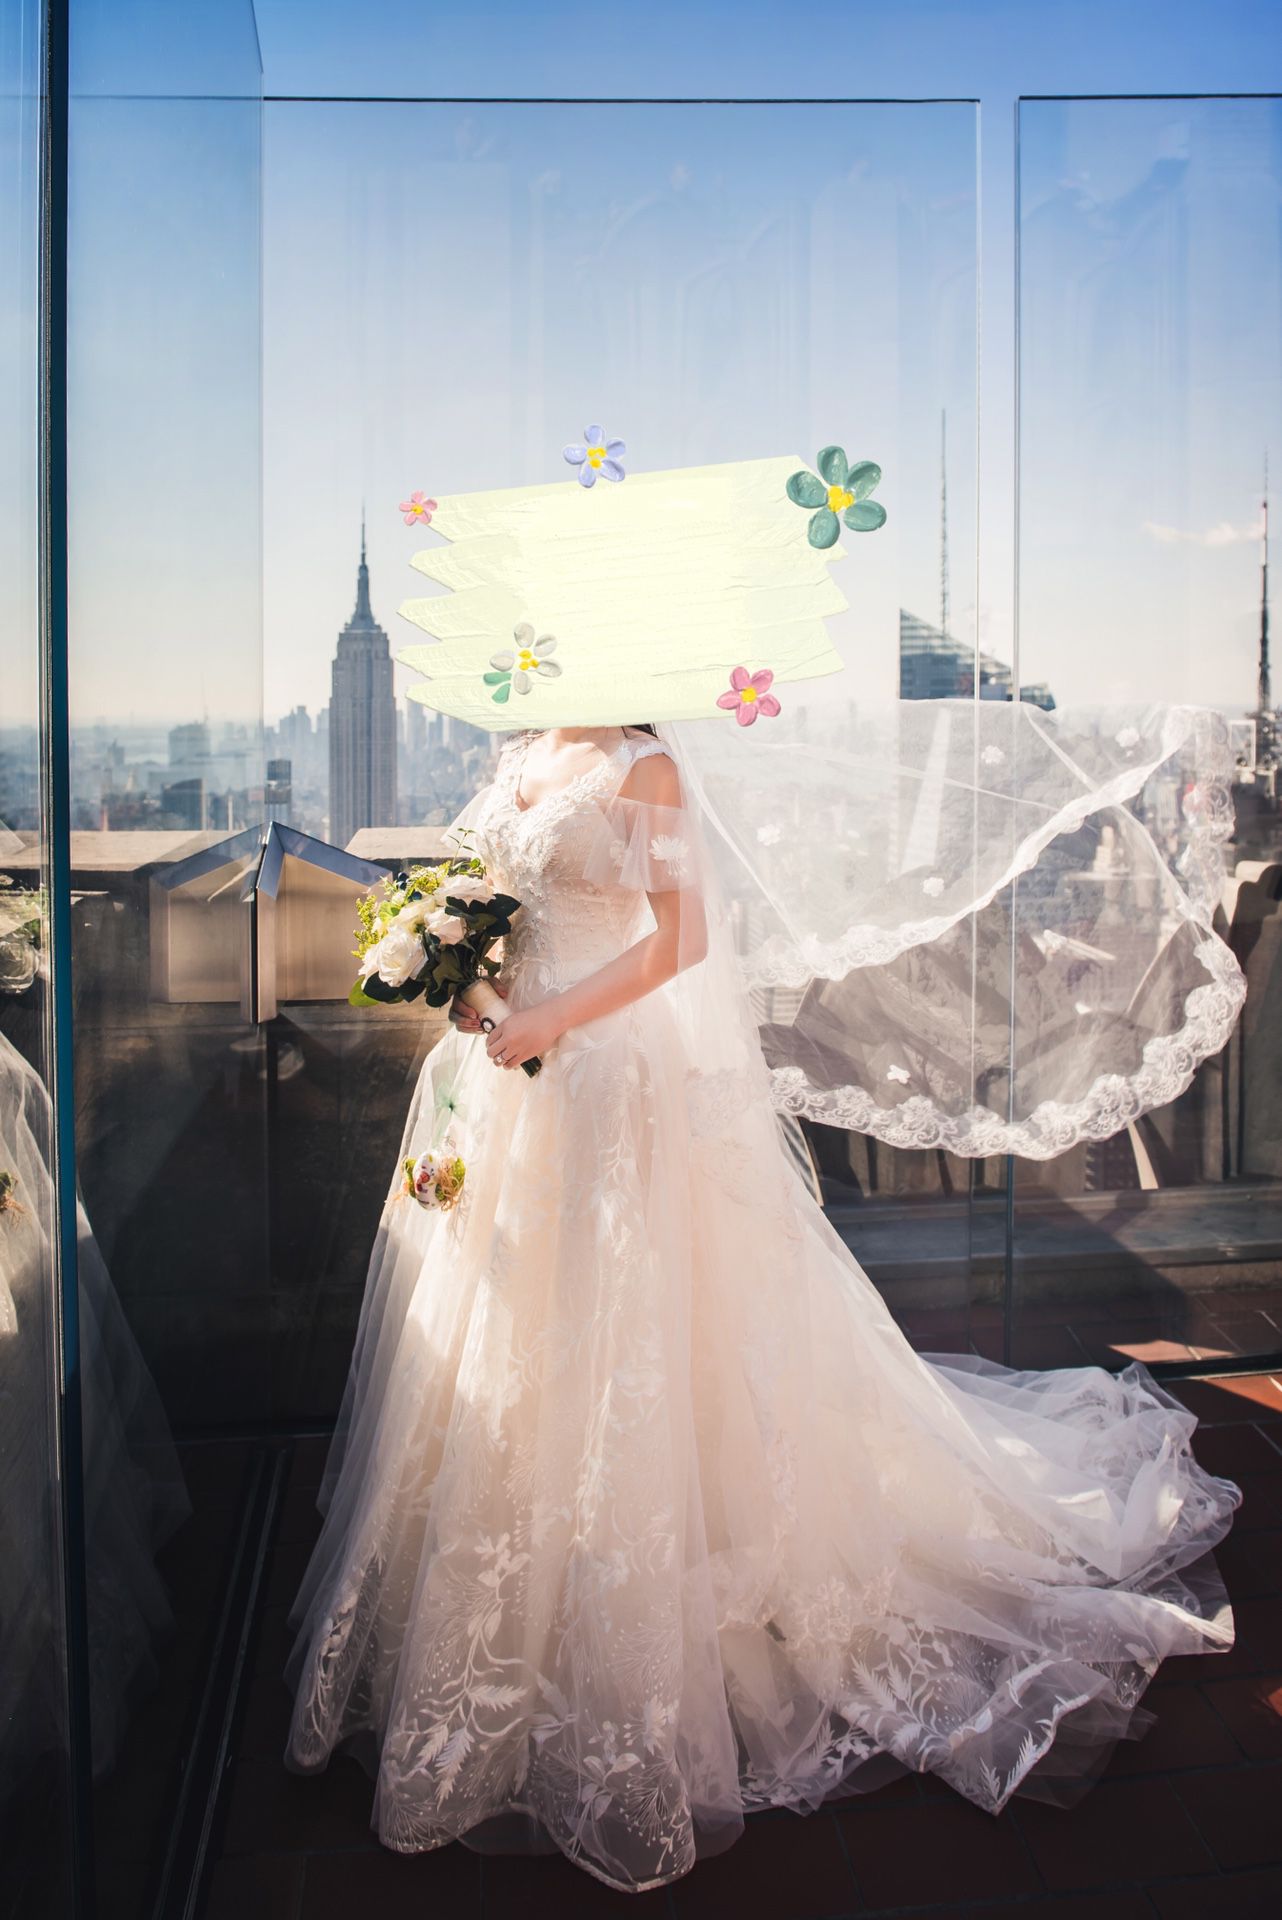 Fairytale gown/wedding dress